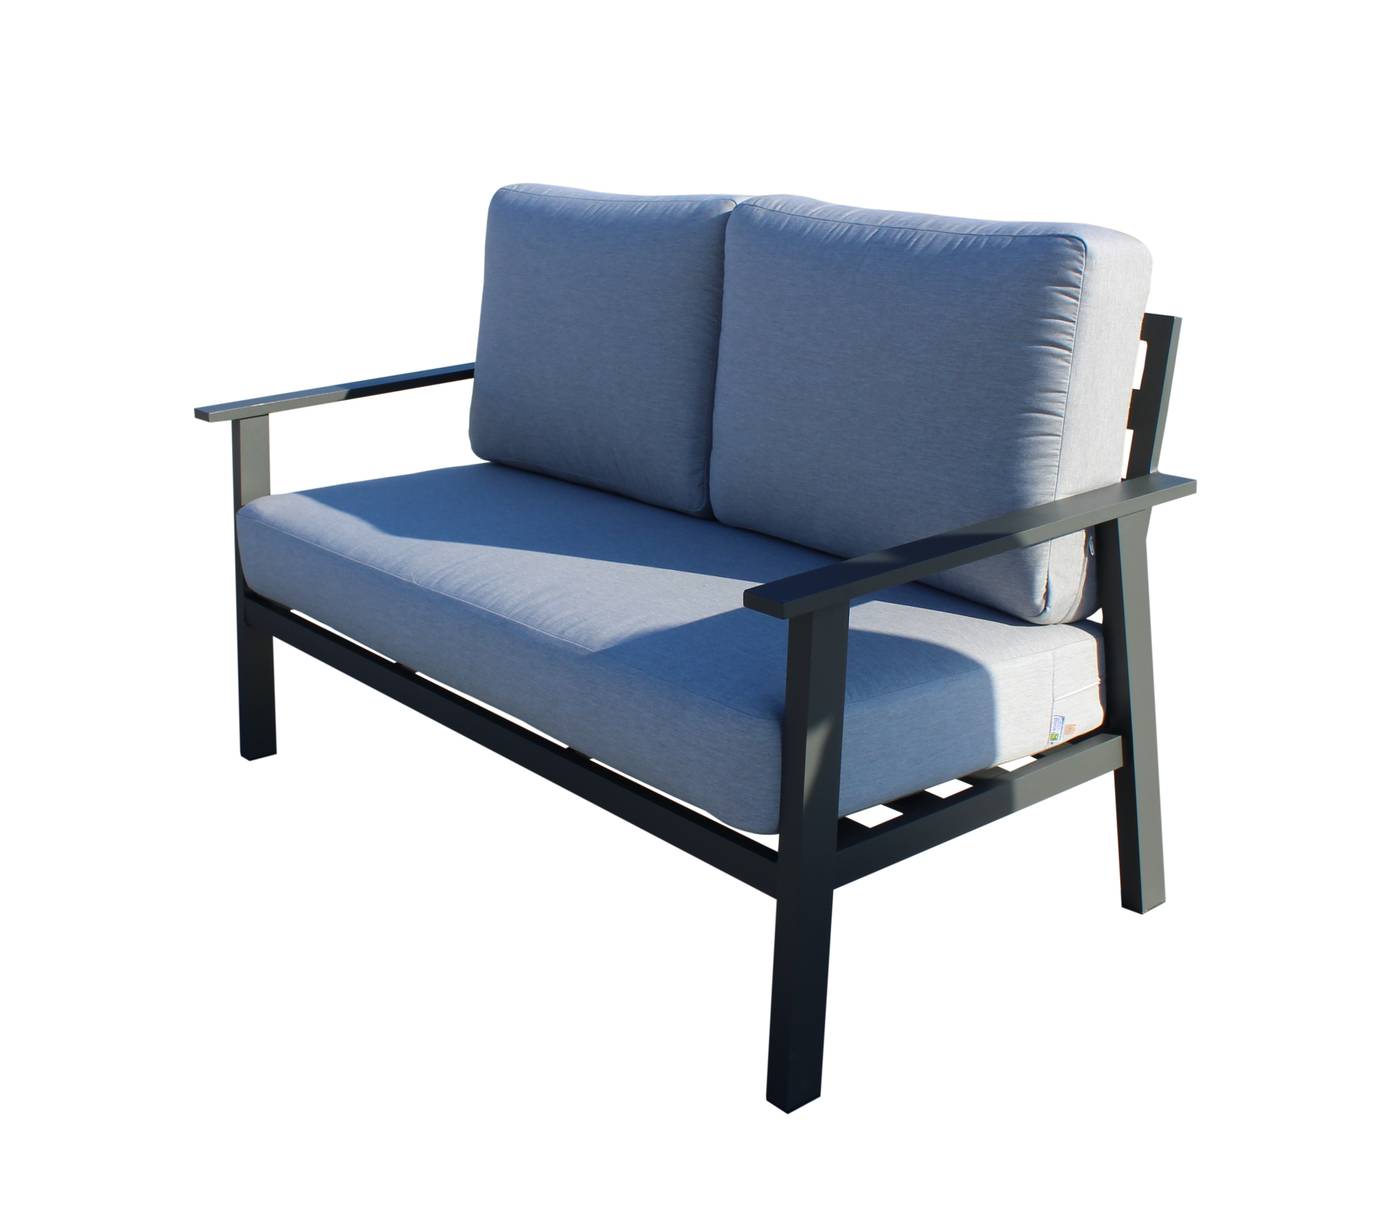 Set Aluminio Eliot-9 - Conjunto aluminio: sofá 2 plazas + 2 sillones + mesa de centro + 2 taburetes. Fabricado de aluminio en color blanco, antracita, champagne, plata o marrón.